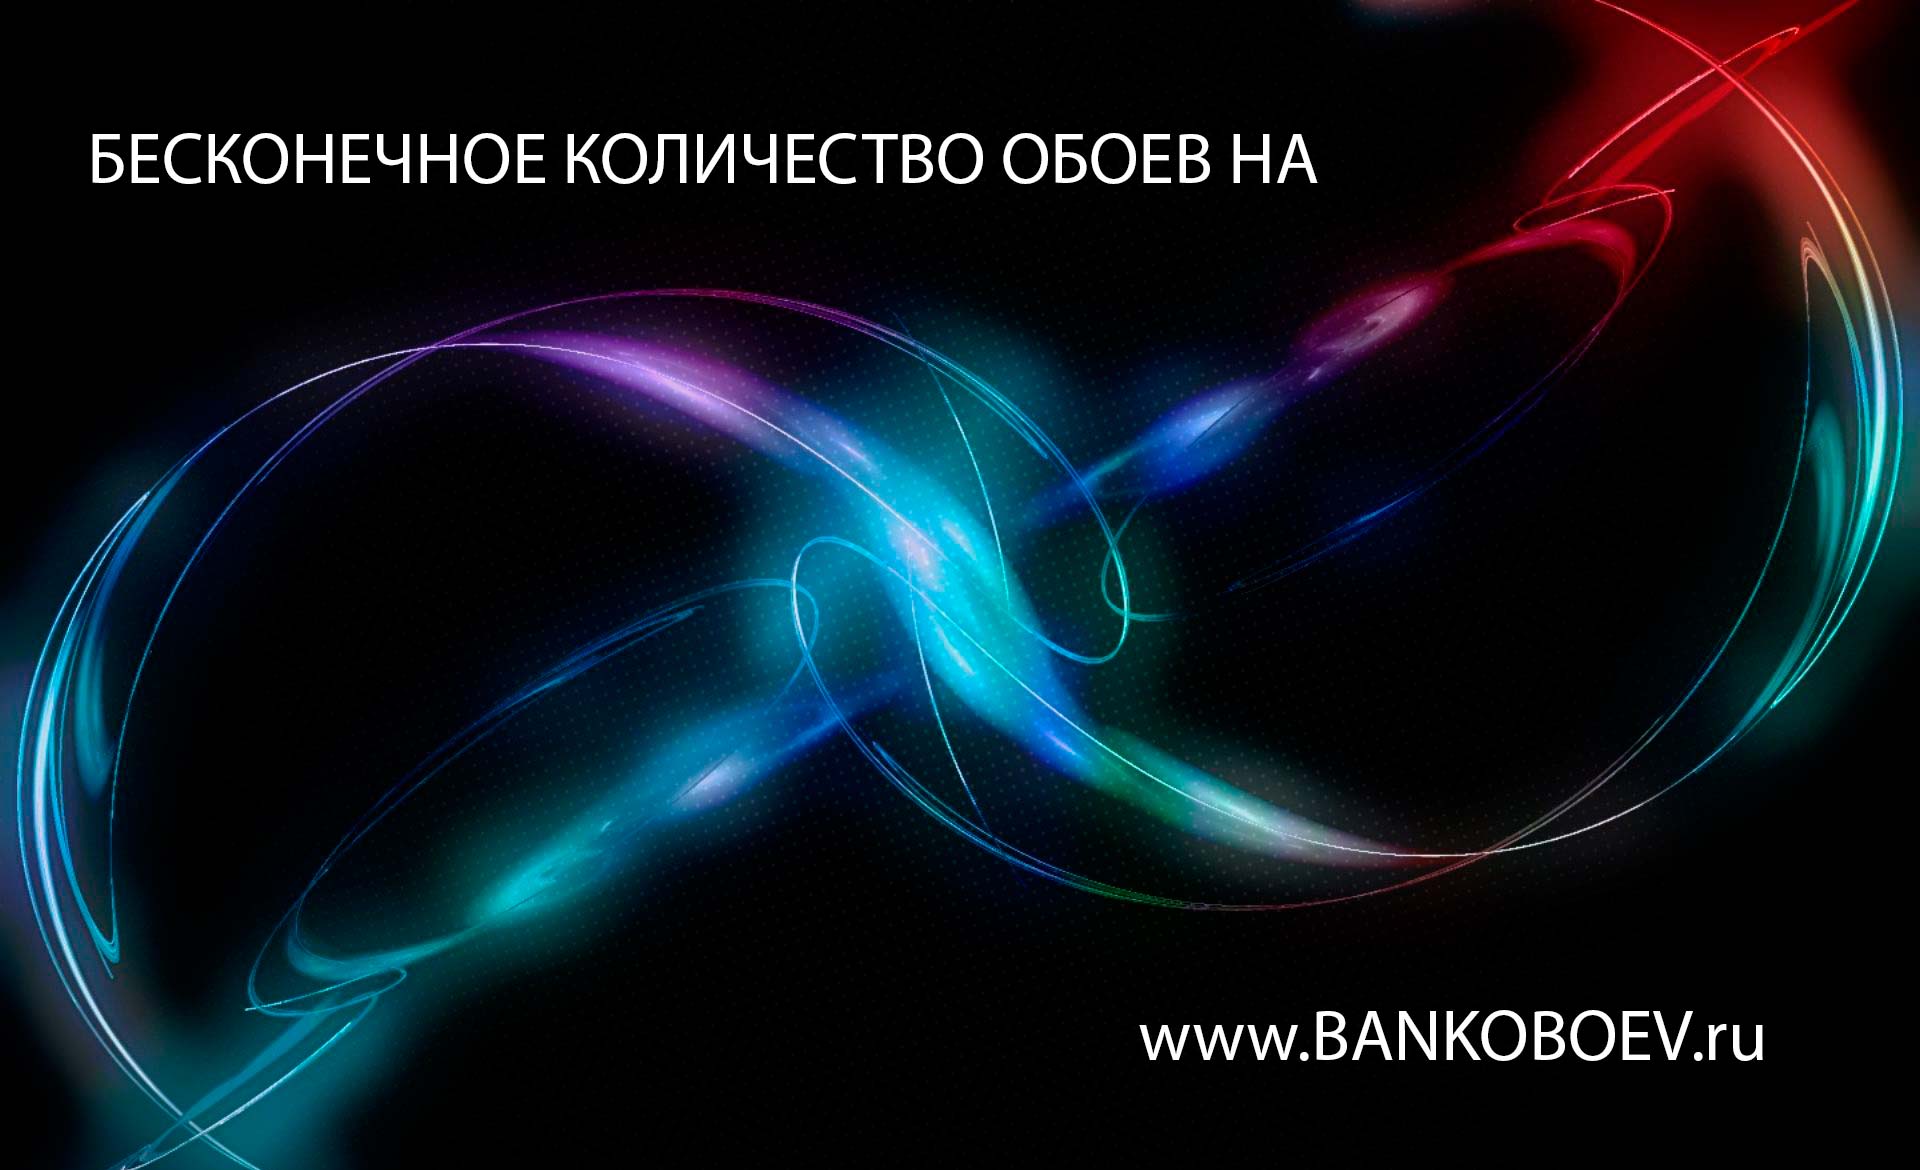 Background Wallpaper Green Light Bankoboev Salatovyi Image